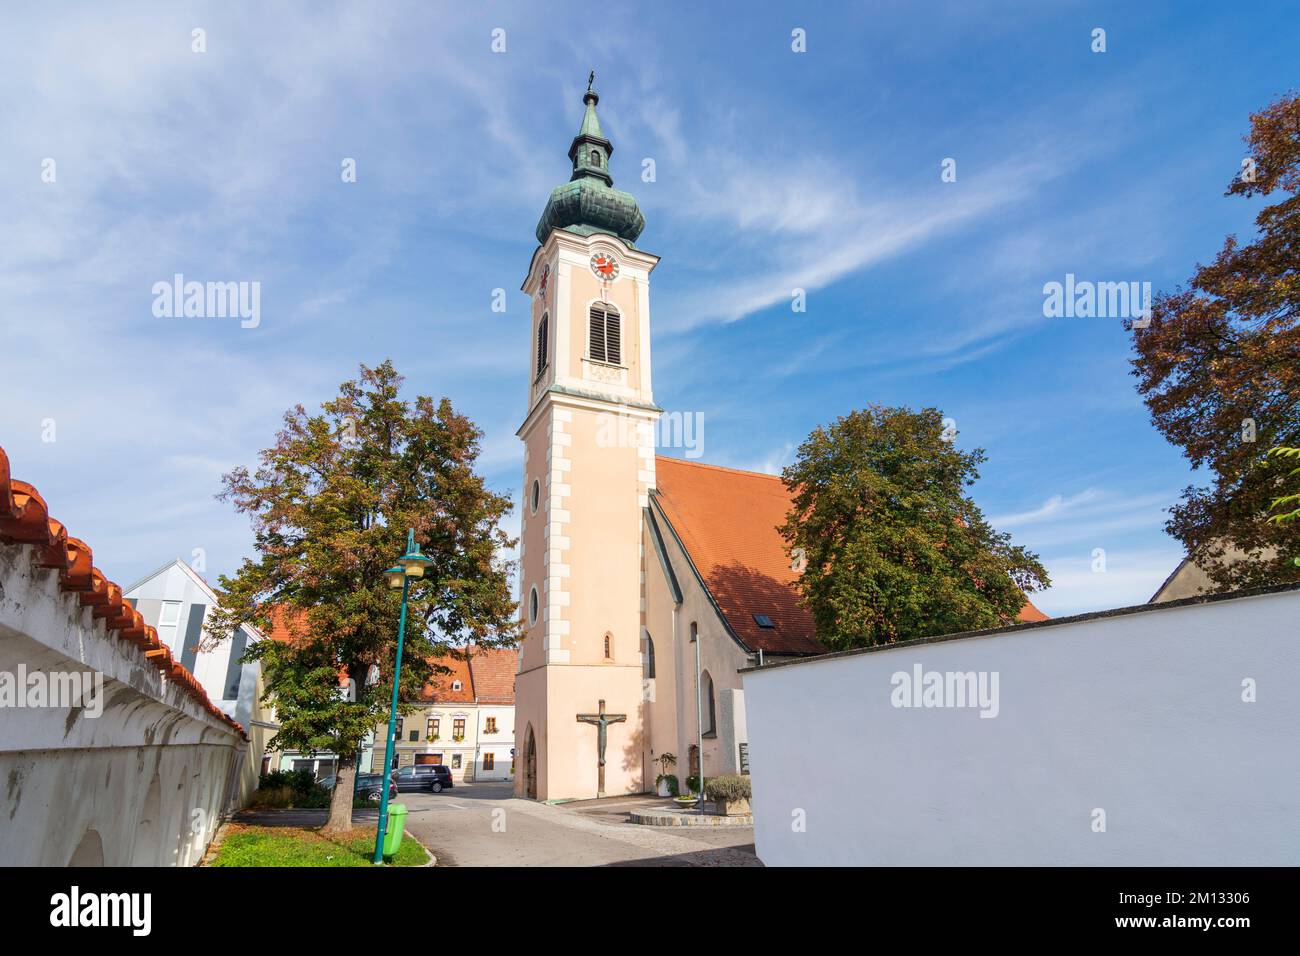 Traismauer, church Traismauer in Donau, Lower Austria, Austria Stock Photo